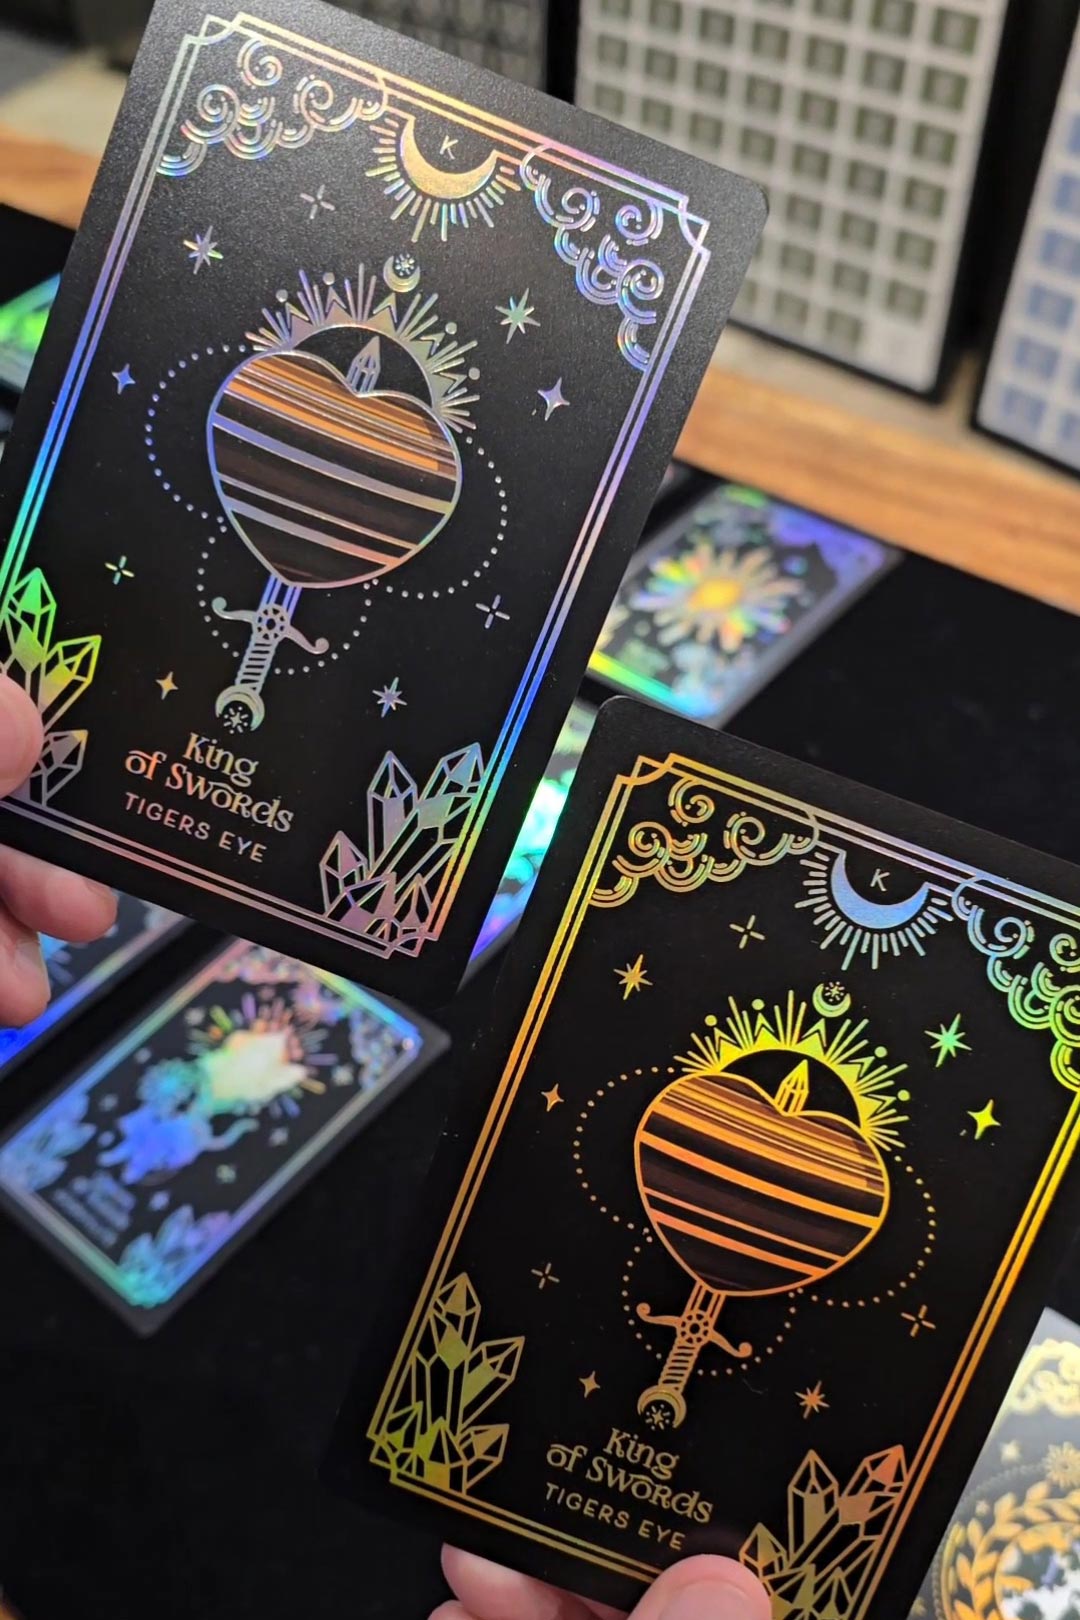 Crystalstruck Silver Edition Tarot Cards